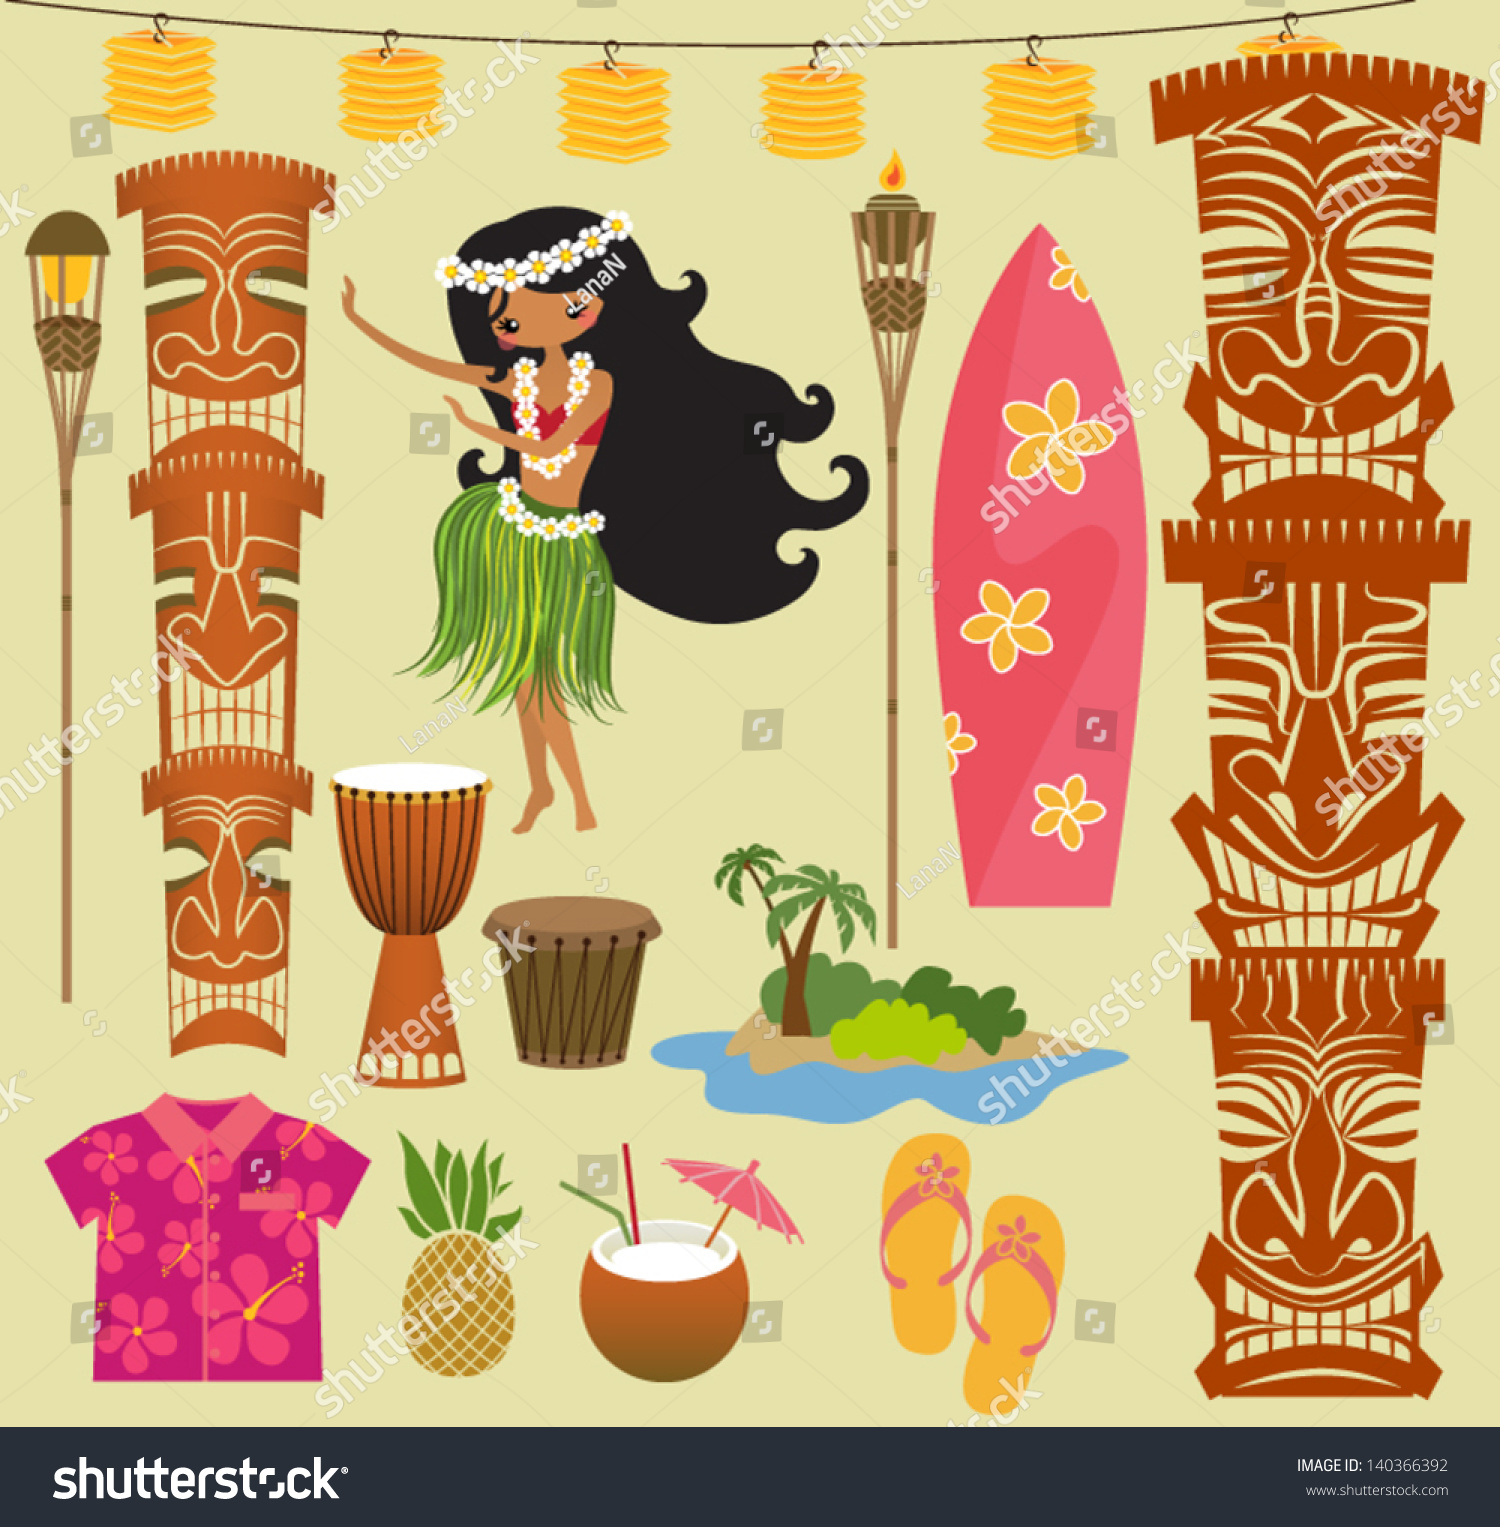 SVG of Hawaii Symbols and Icons, including Hula dancer, tiki gods, totem pole, drums, tiki torches and Hawaiian shirt svg